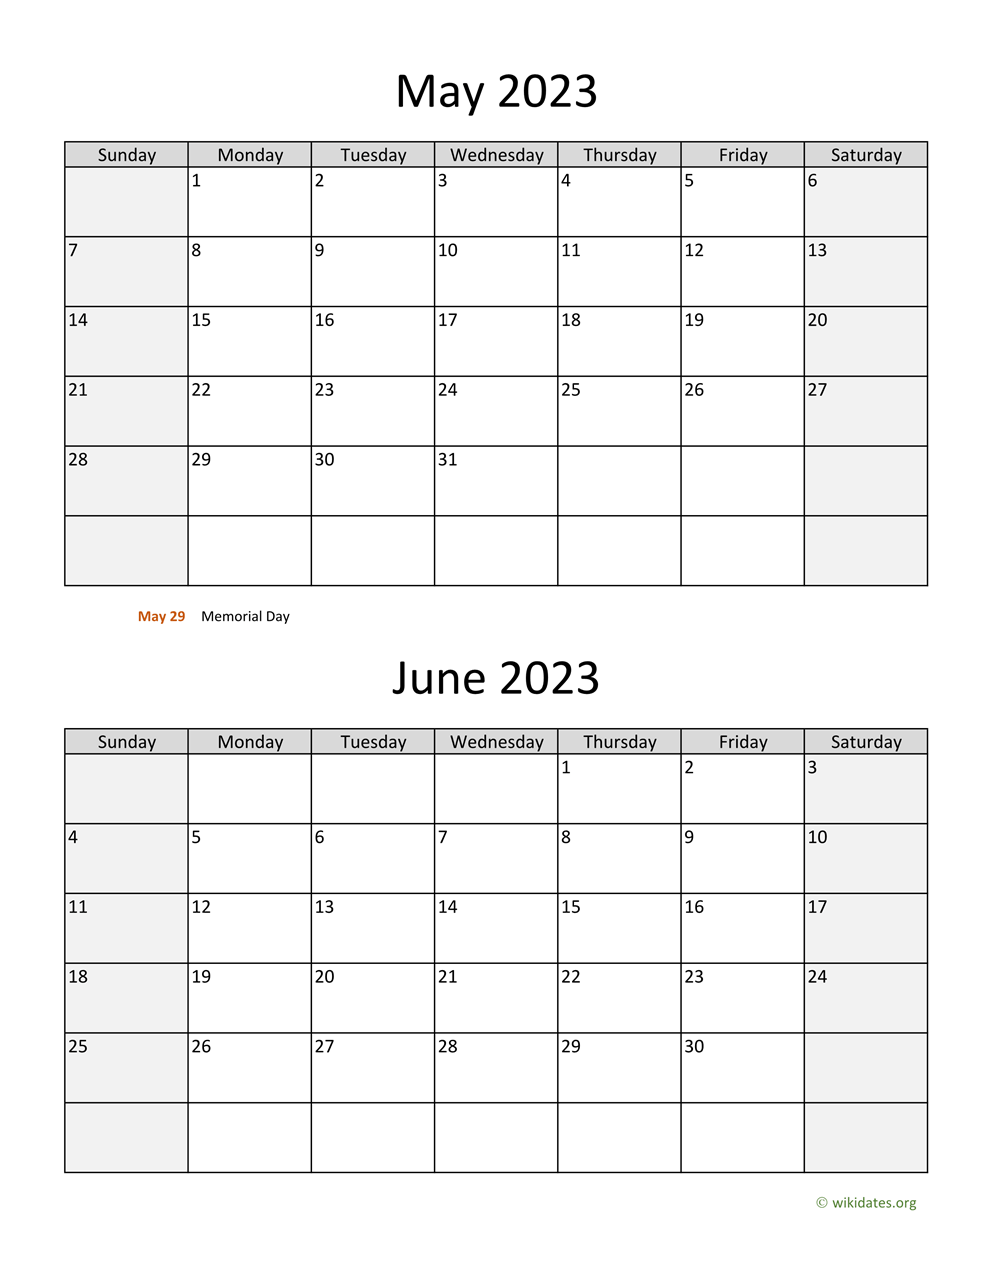 image-november-2022-calendar-may-calendar-2022